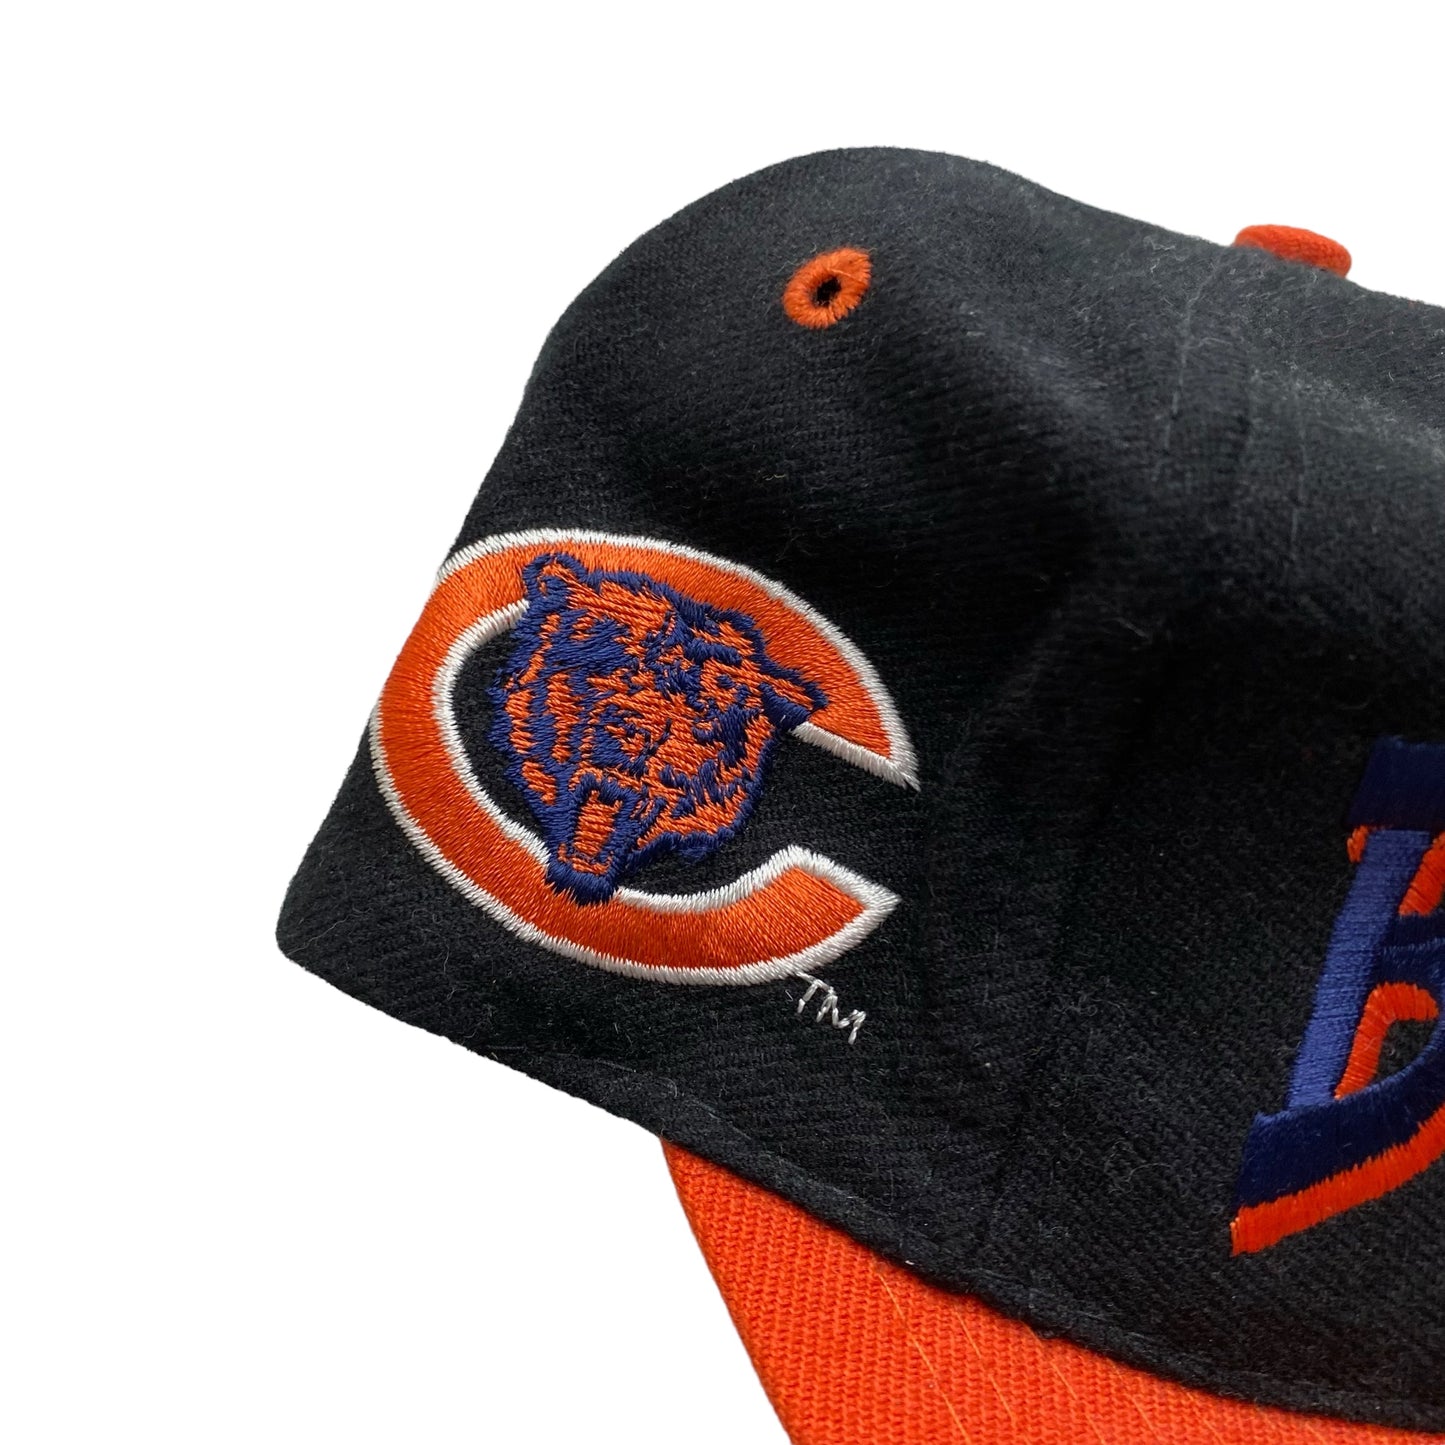 Vintage Chicago Bears NFL Black Arch Text Snap Back Hat